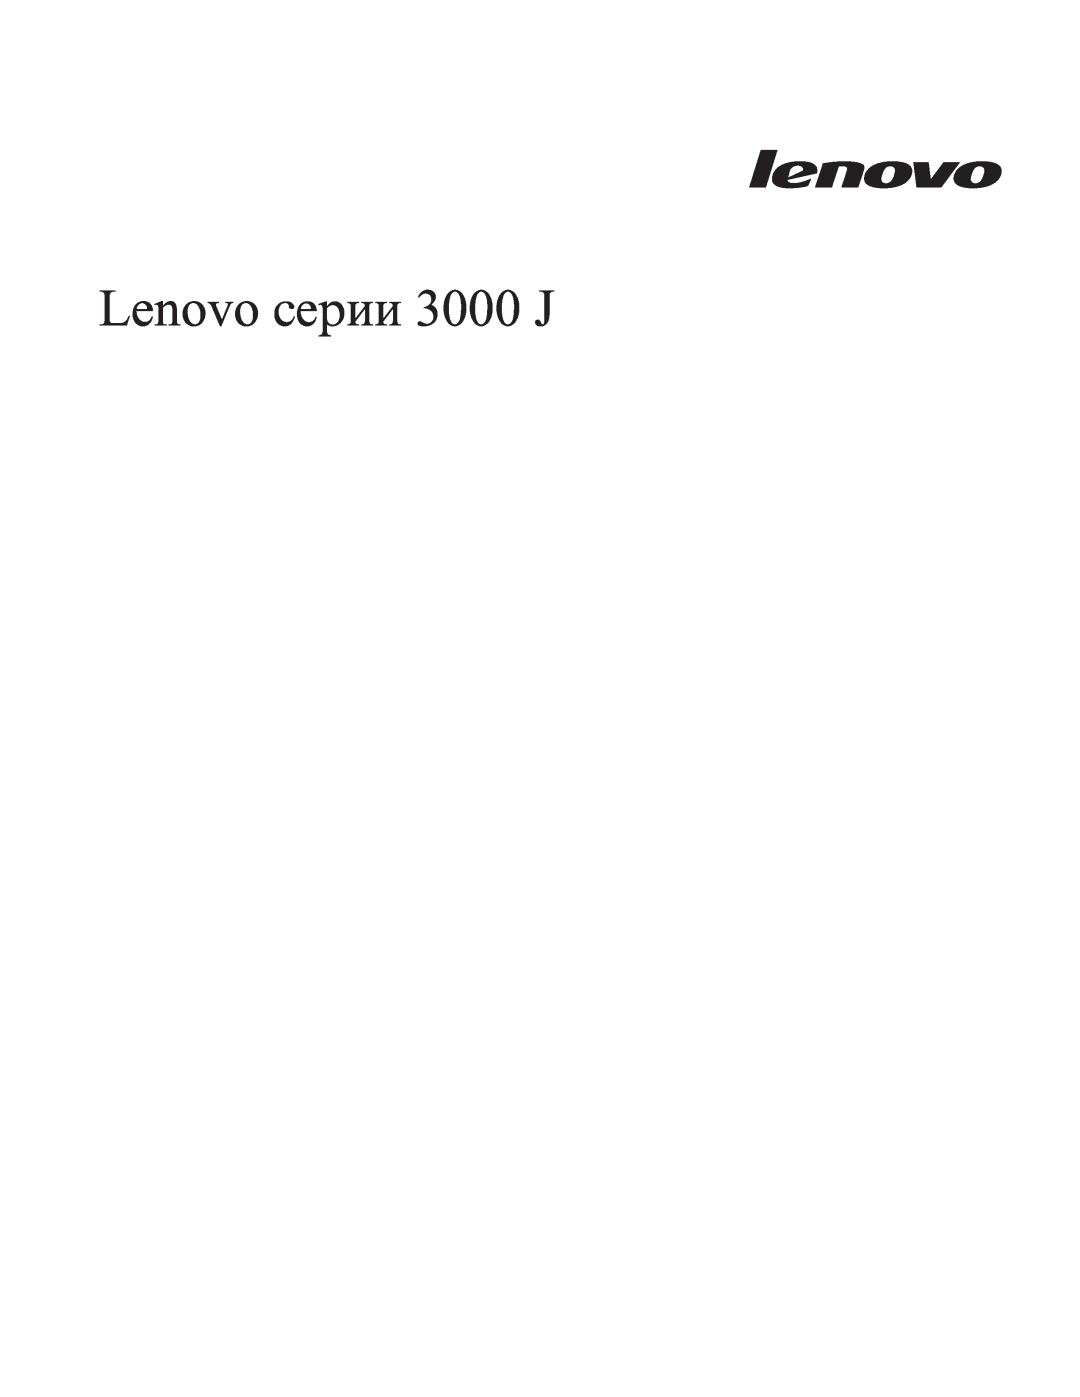 Lenovo 7398, 7397, 7392, 7391, 7396, 7390 manual Lenovo серии 3000 J 